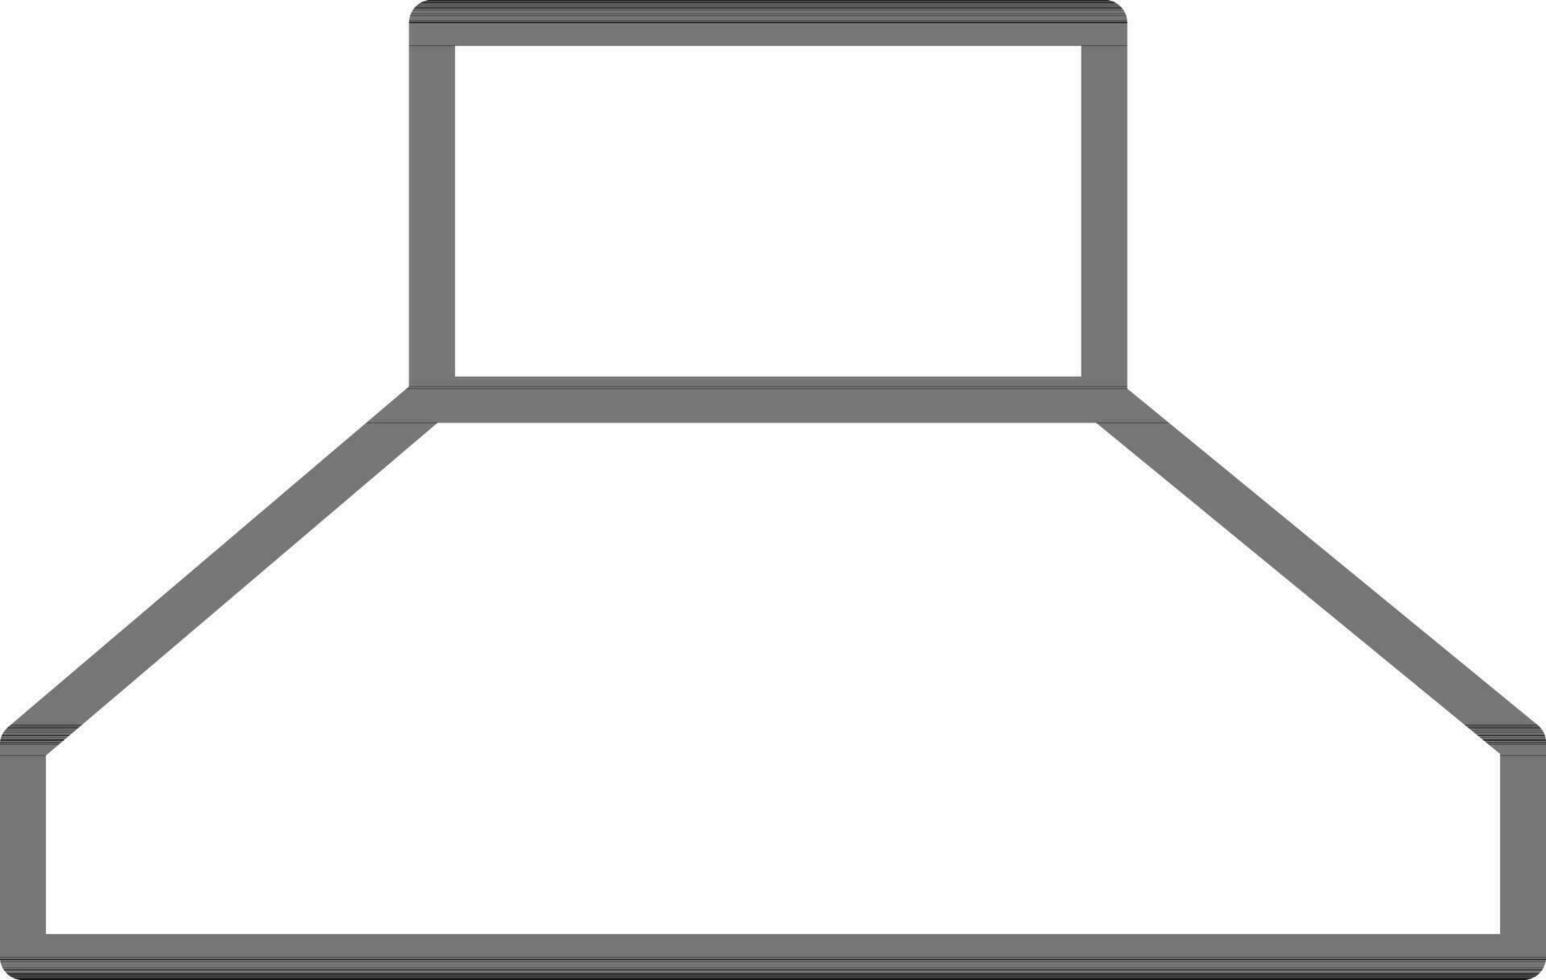 Black line art illustration of Chimney or Exhaust hood icon. vector